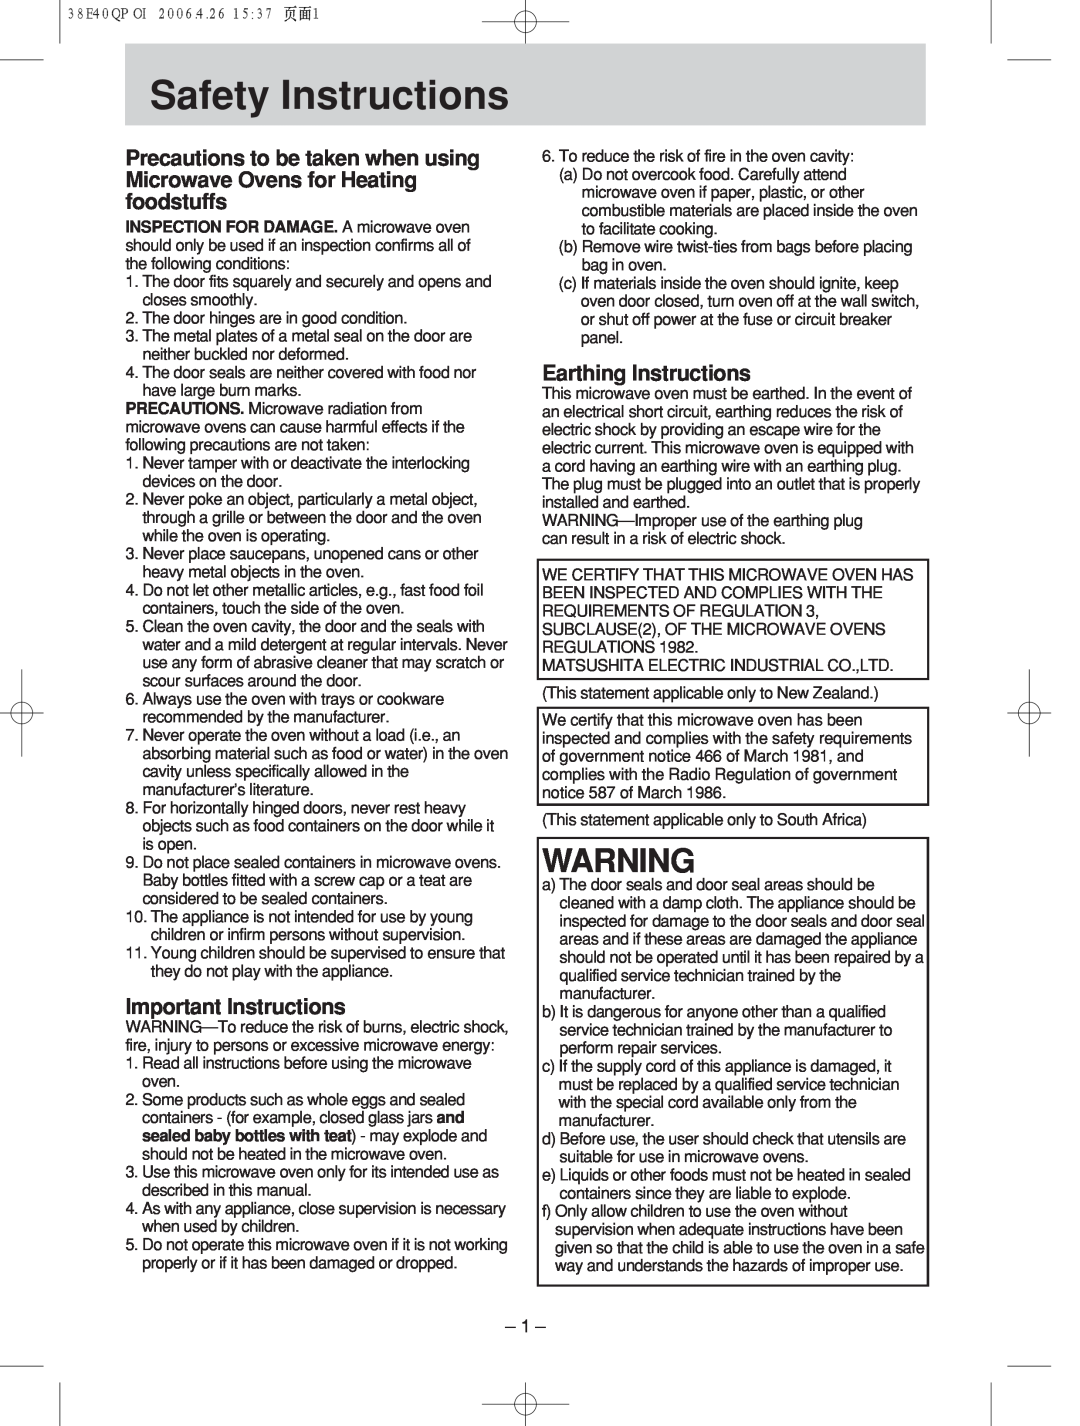 Panasonic NN-SD786S manual Safety!!!!! Instructions, Important Instructions, Earthing Instructions 